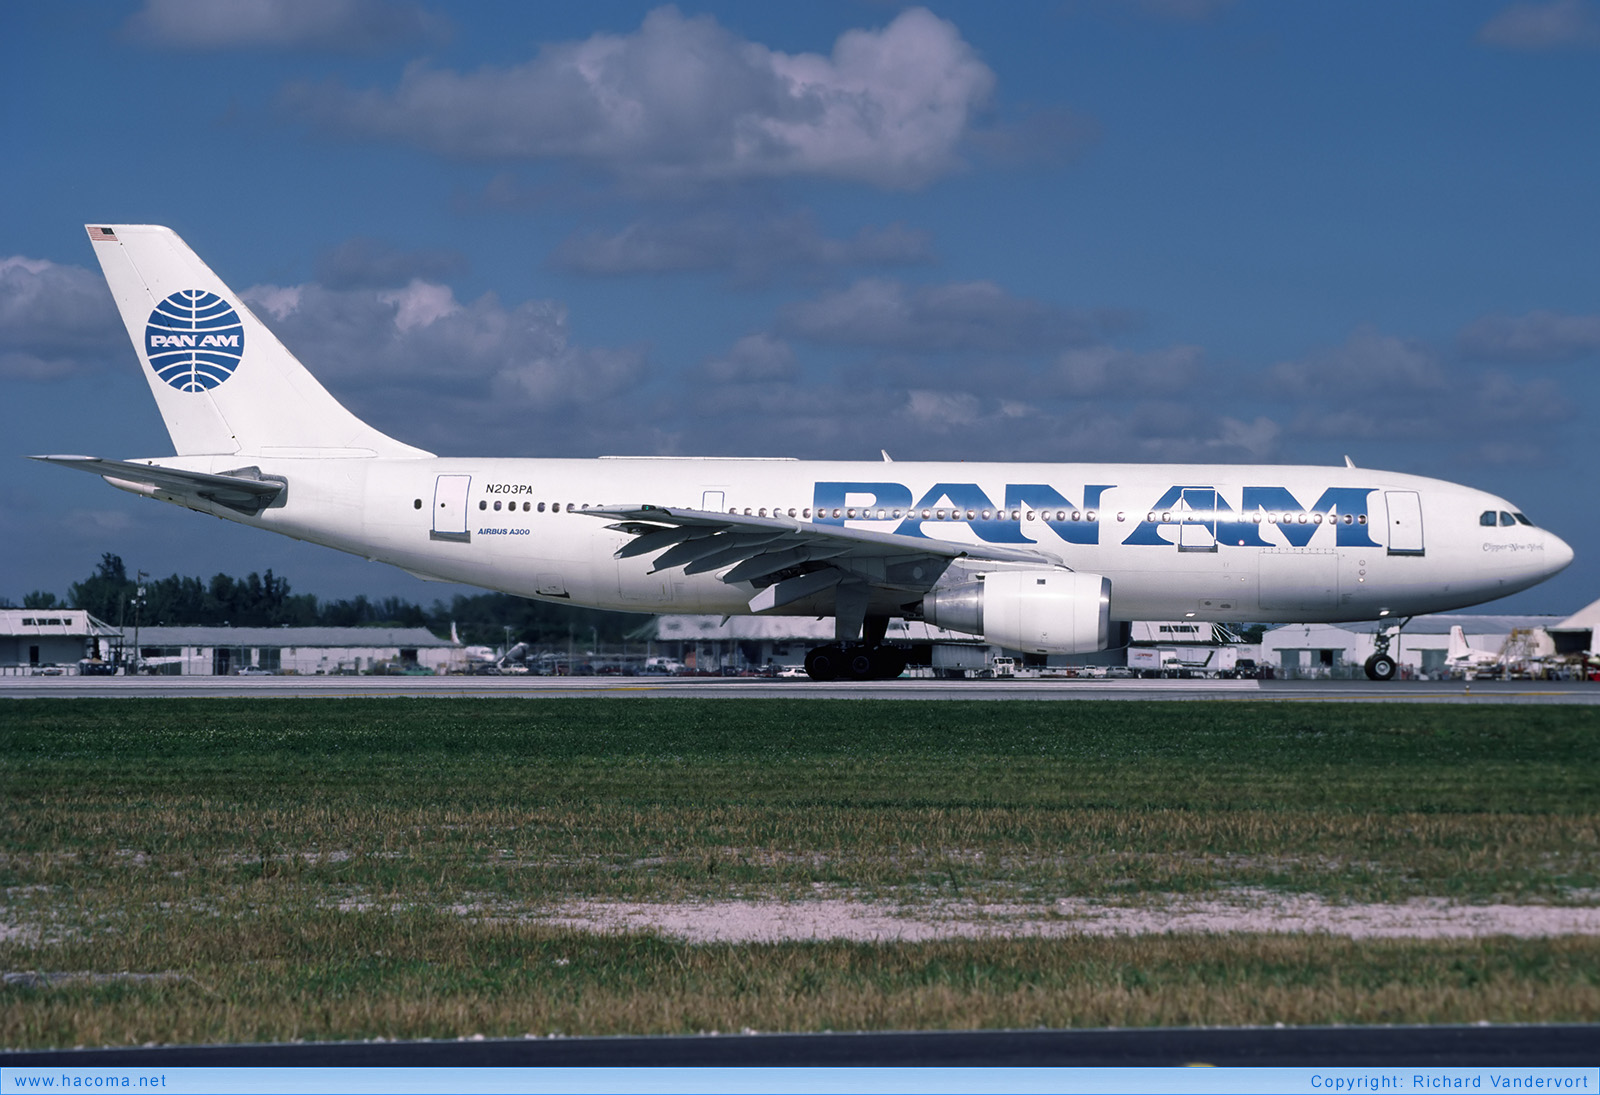 Photo of N203PA - Pan Am Clipper New York - Miami International Airport - Nov 1988